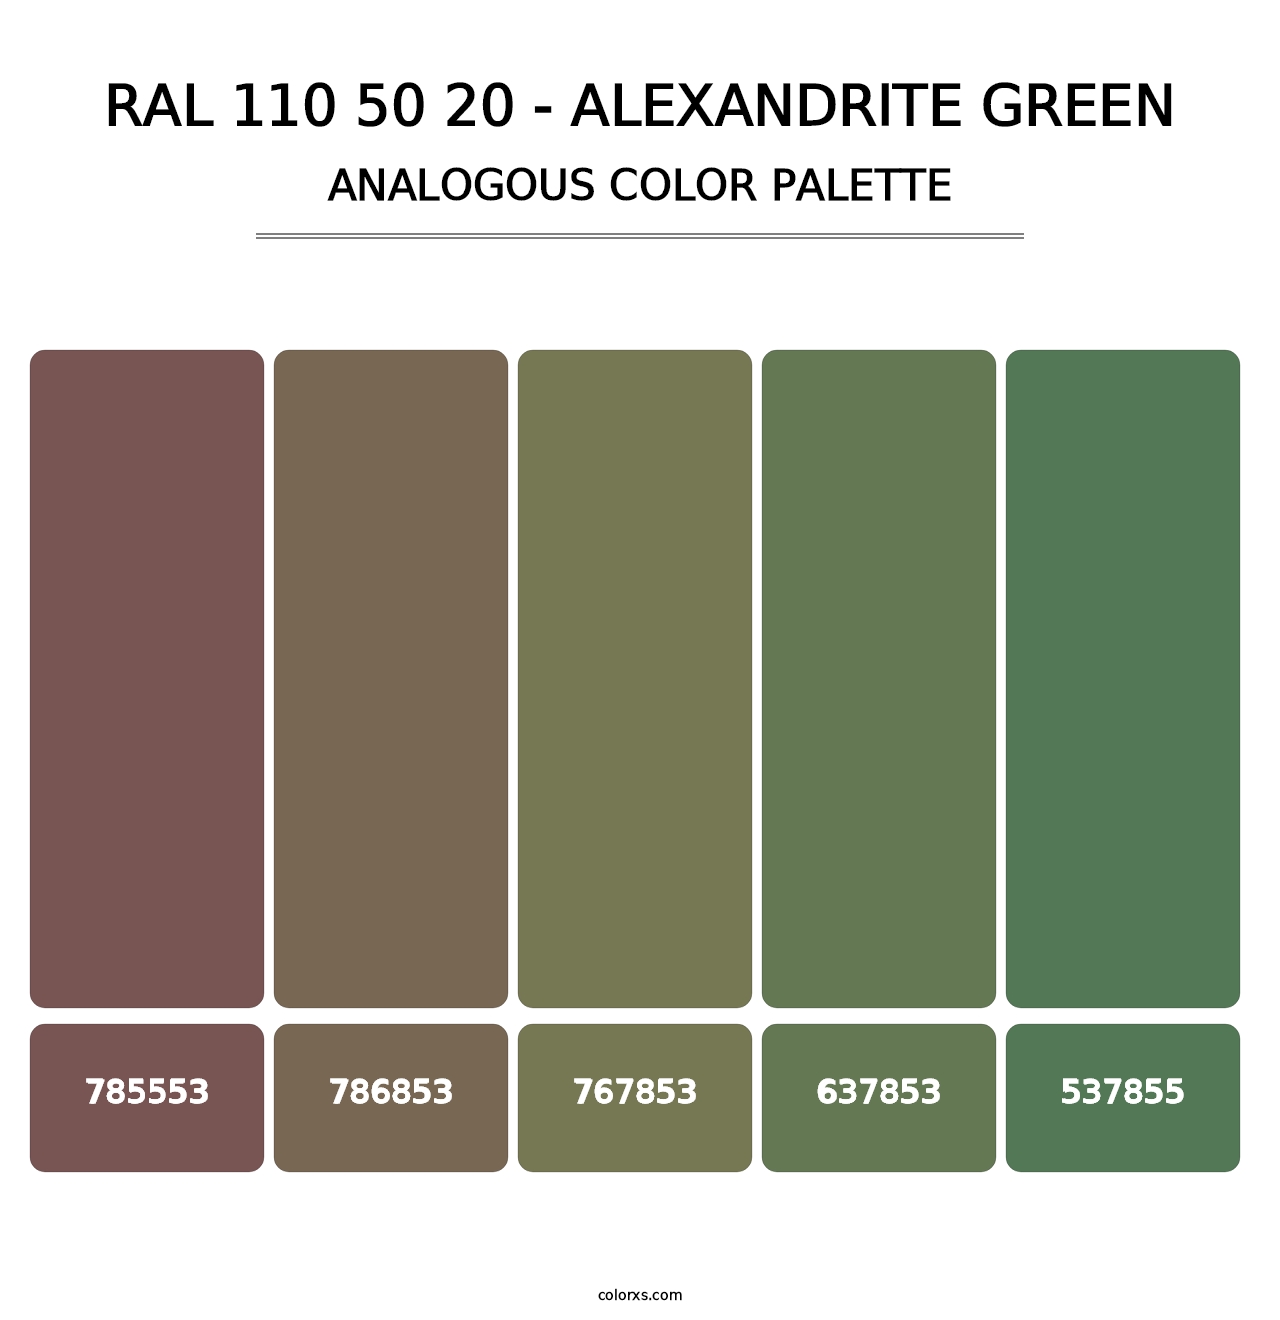 RAL 110 50 20 - Alexandrite Green - Analogous Color Palette